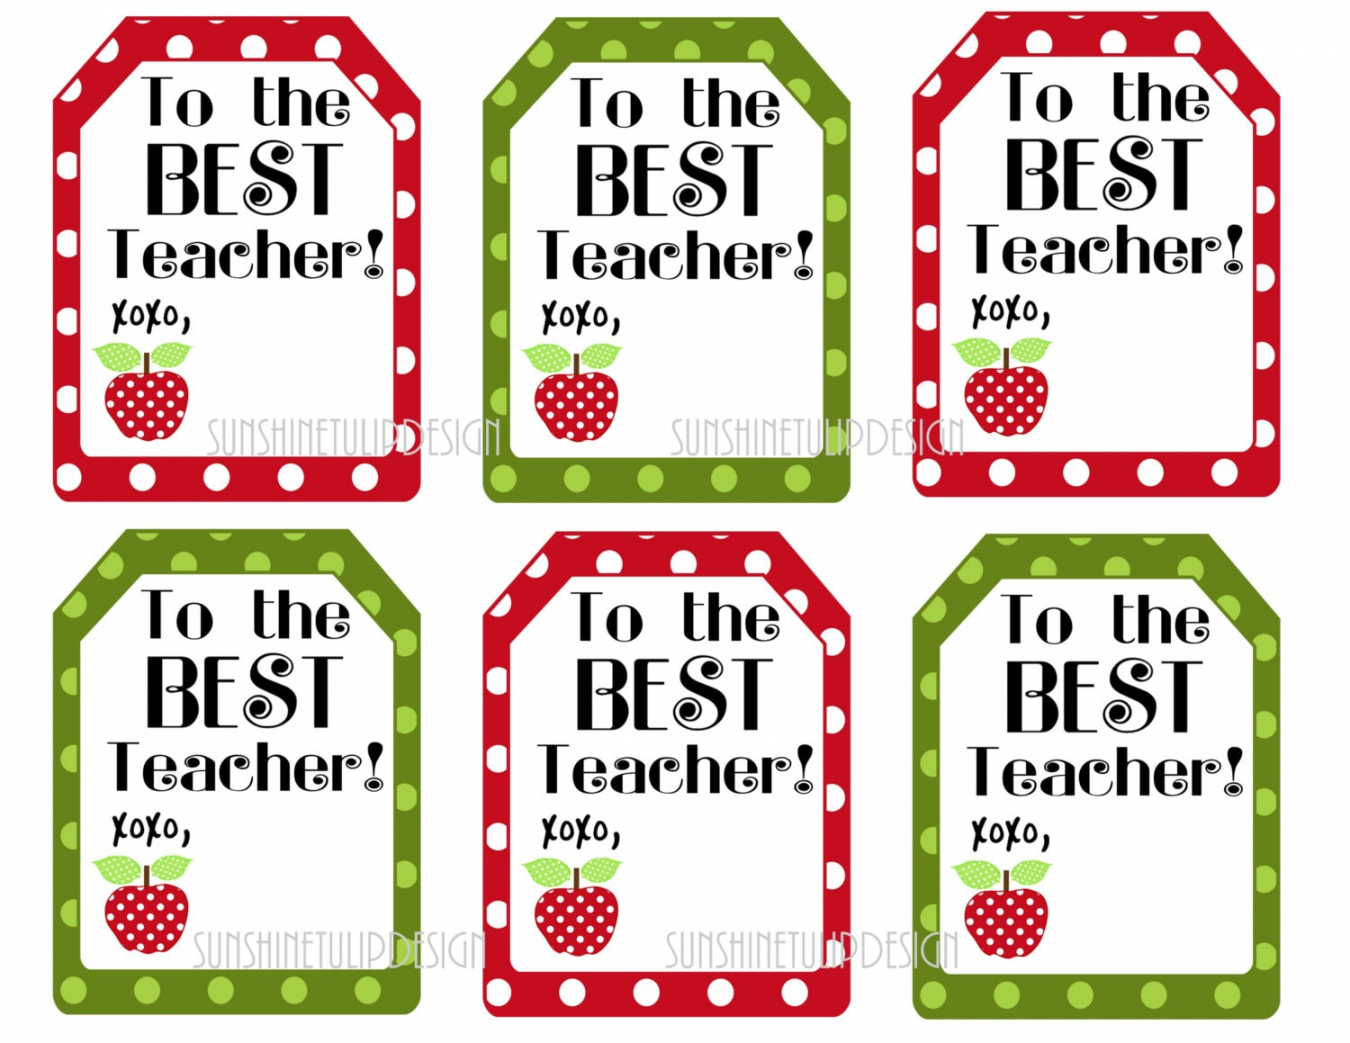 Teacher Appreciation Free Printable Tags - Printable - Teacher Appreciation Printable tags, Printable The BEST Teacher Gift Tags,  Printable Teacher Appreciation Gift Tags by SUNSHINETULIPDESIGN